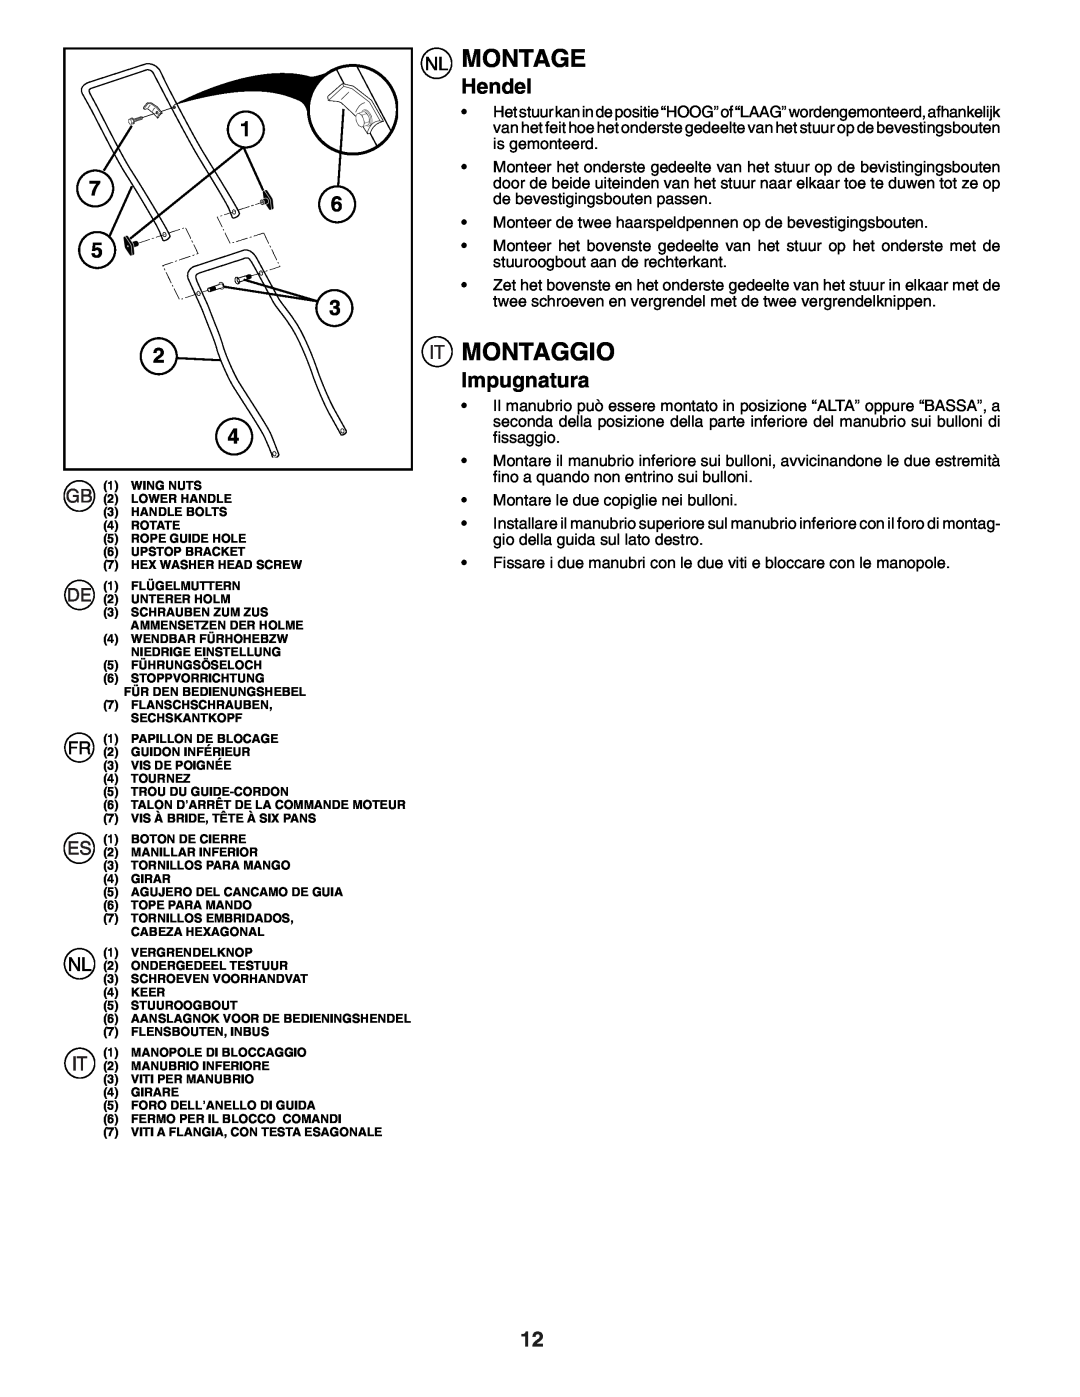 Husqvarna J50R instruction manual Montaggio, Hendel, 7 6, Impugnatura, Montage 